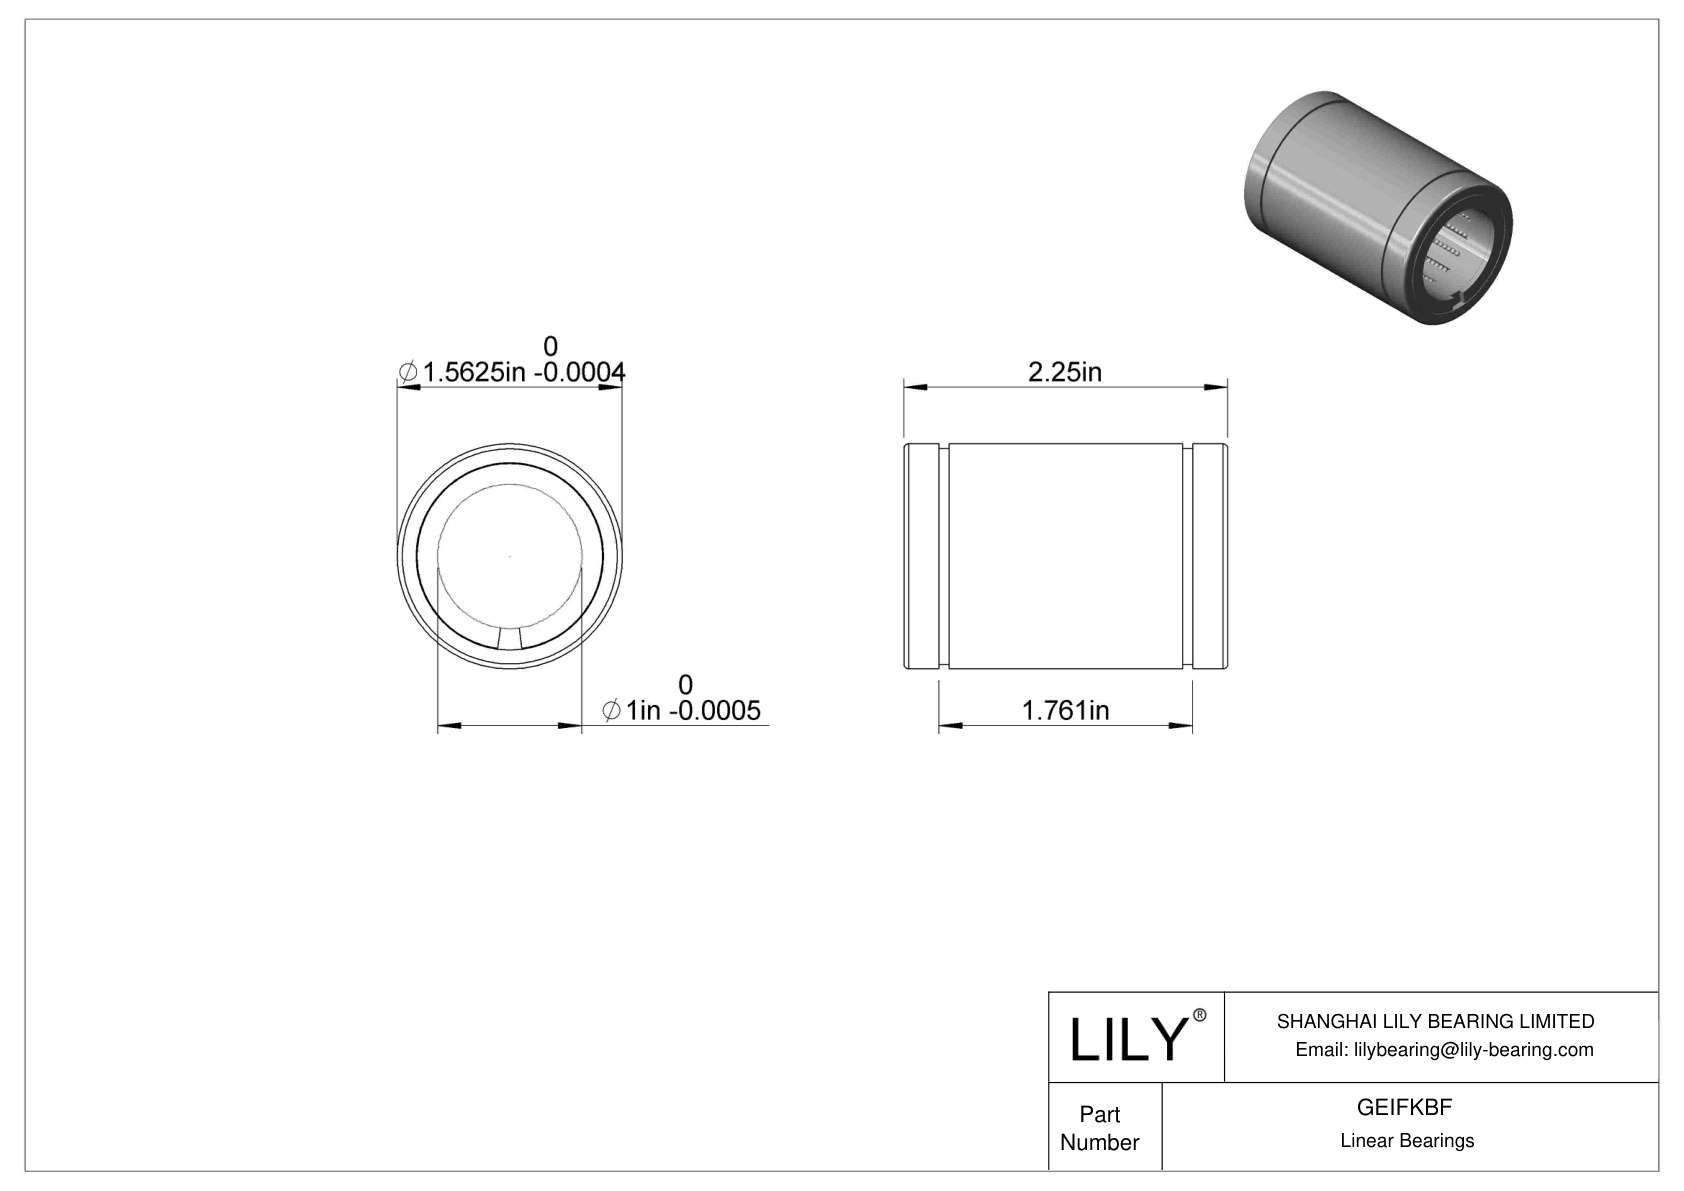 GEIFKBF Linear and Rotary Ball Bearings cad drawing